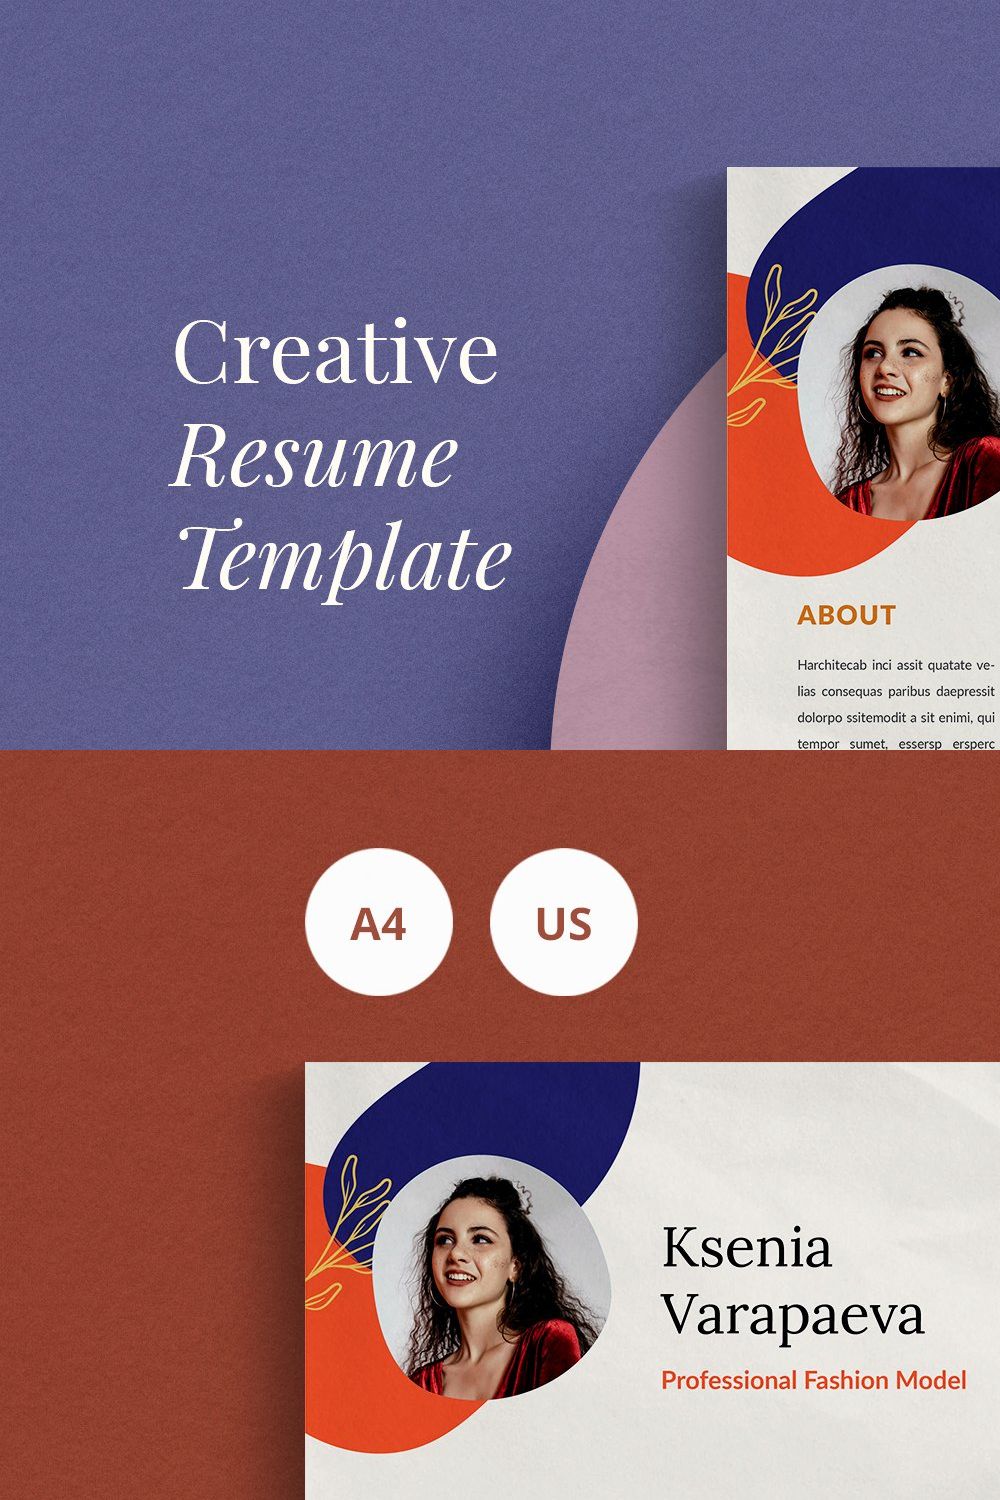 CV Resume | Creative pinterest preview image.